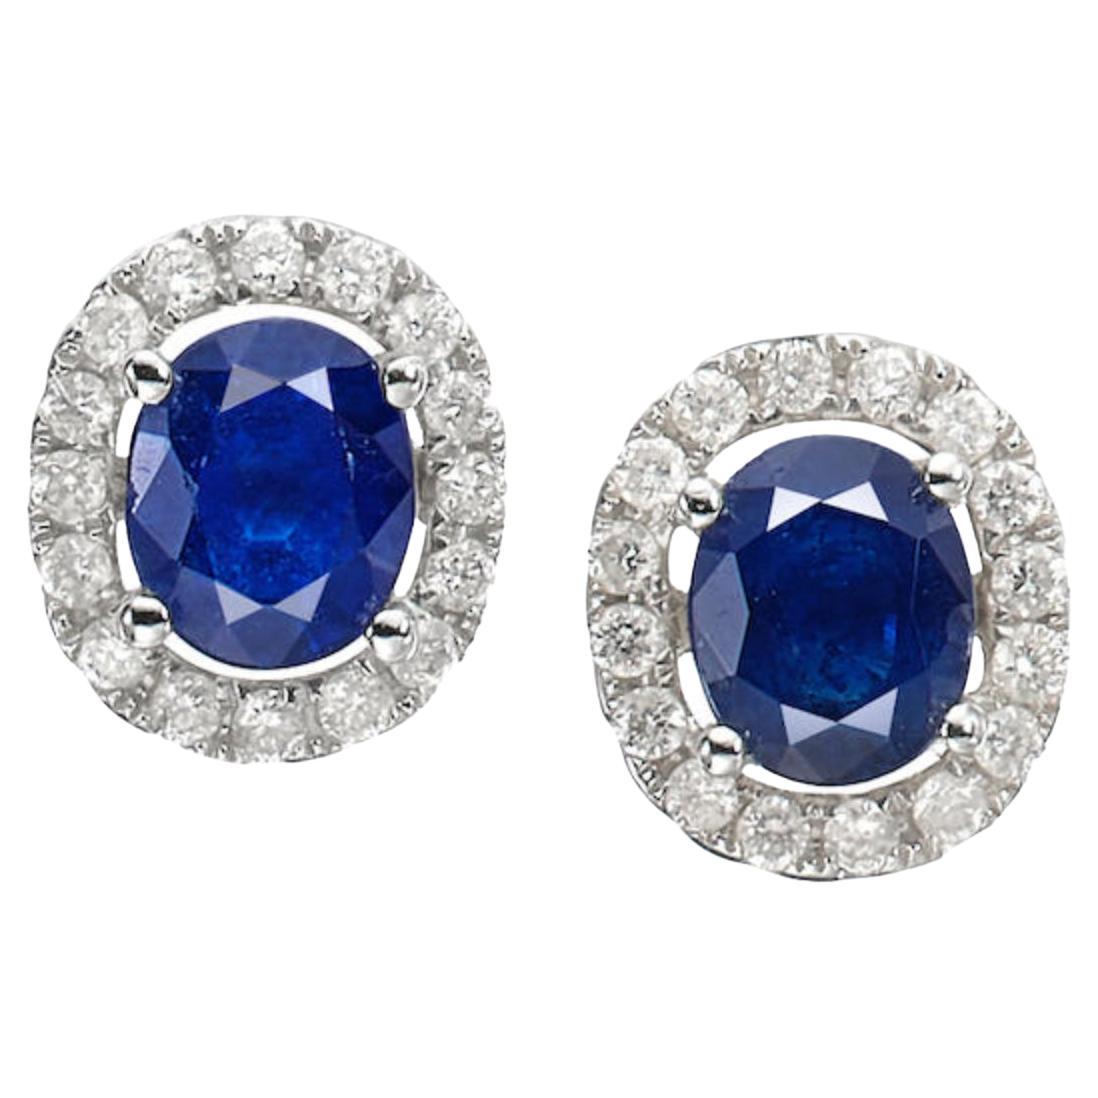 Blue Sapphire Stud Earrings with Diamonds